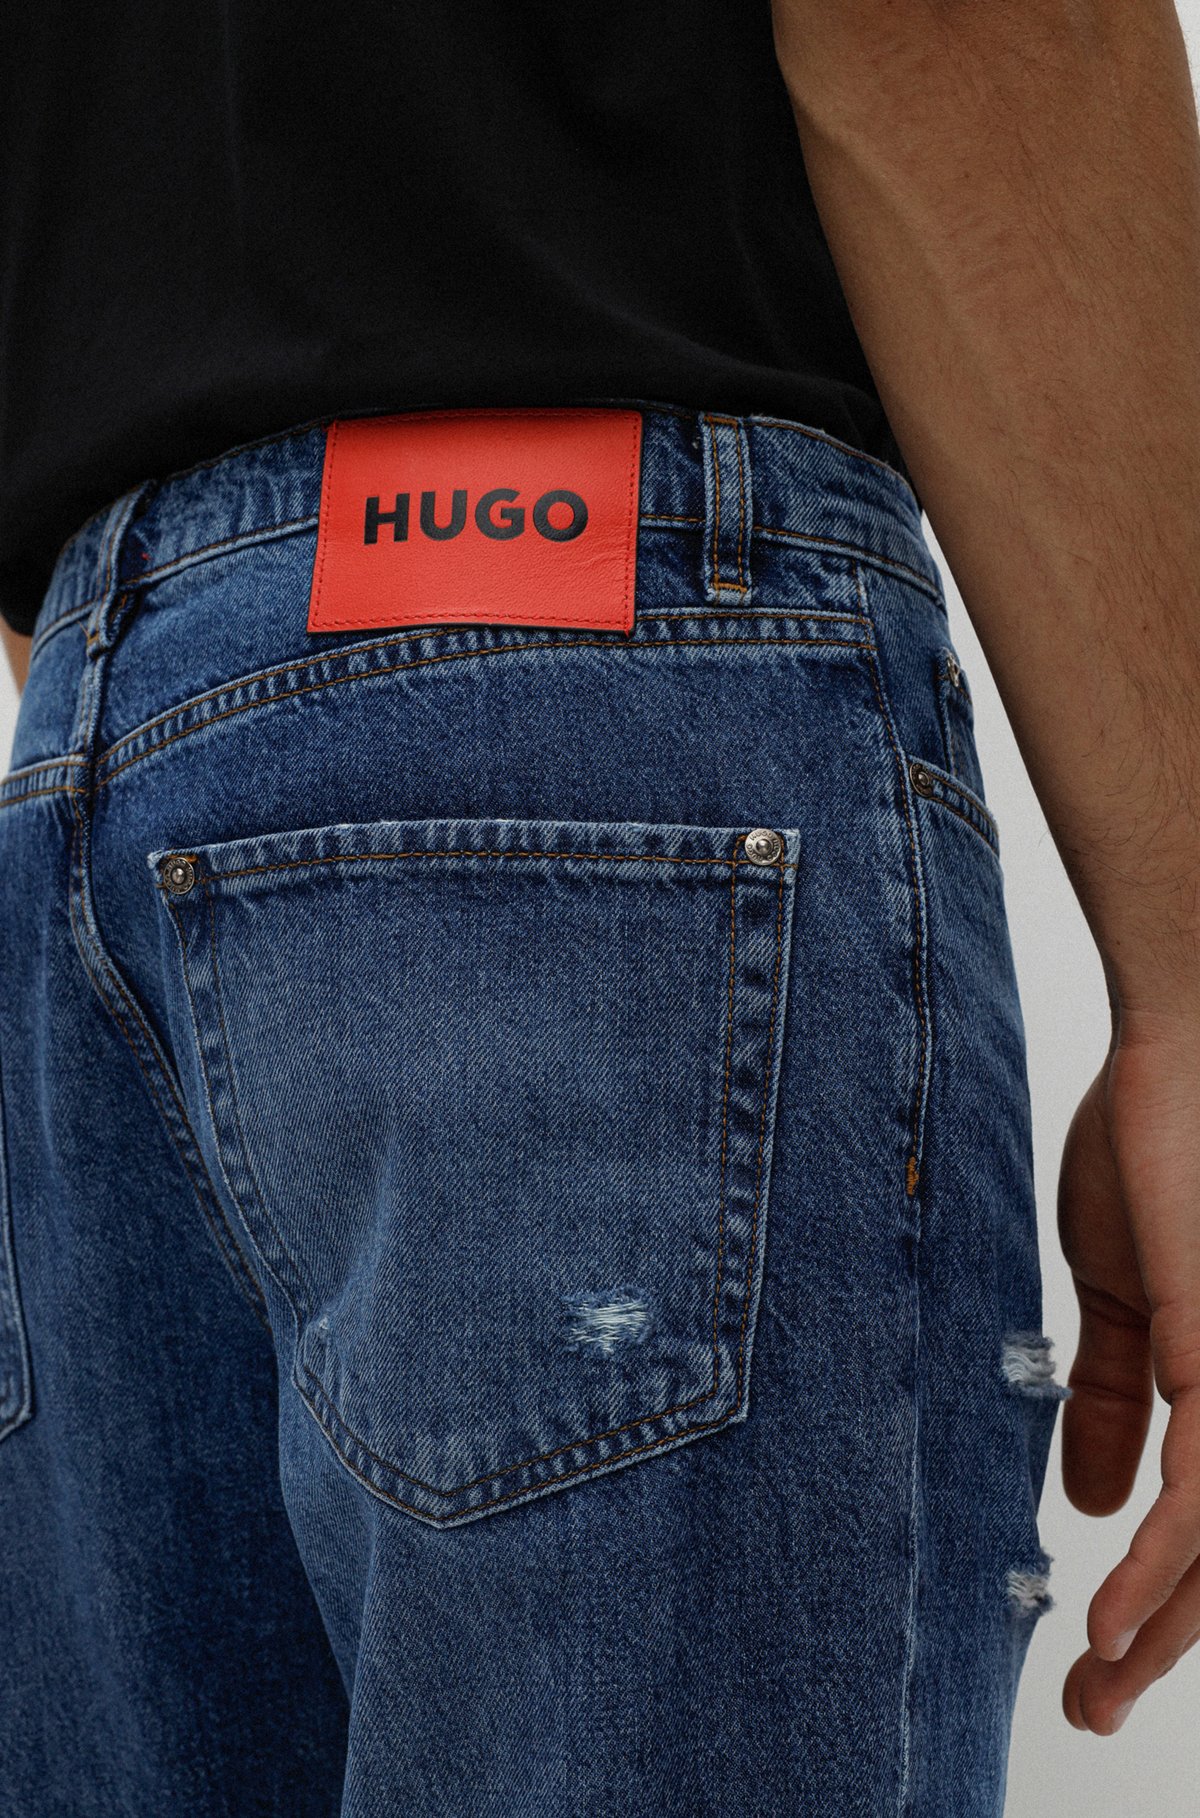 HUGO jeans in blue denim with distressed details